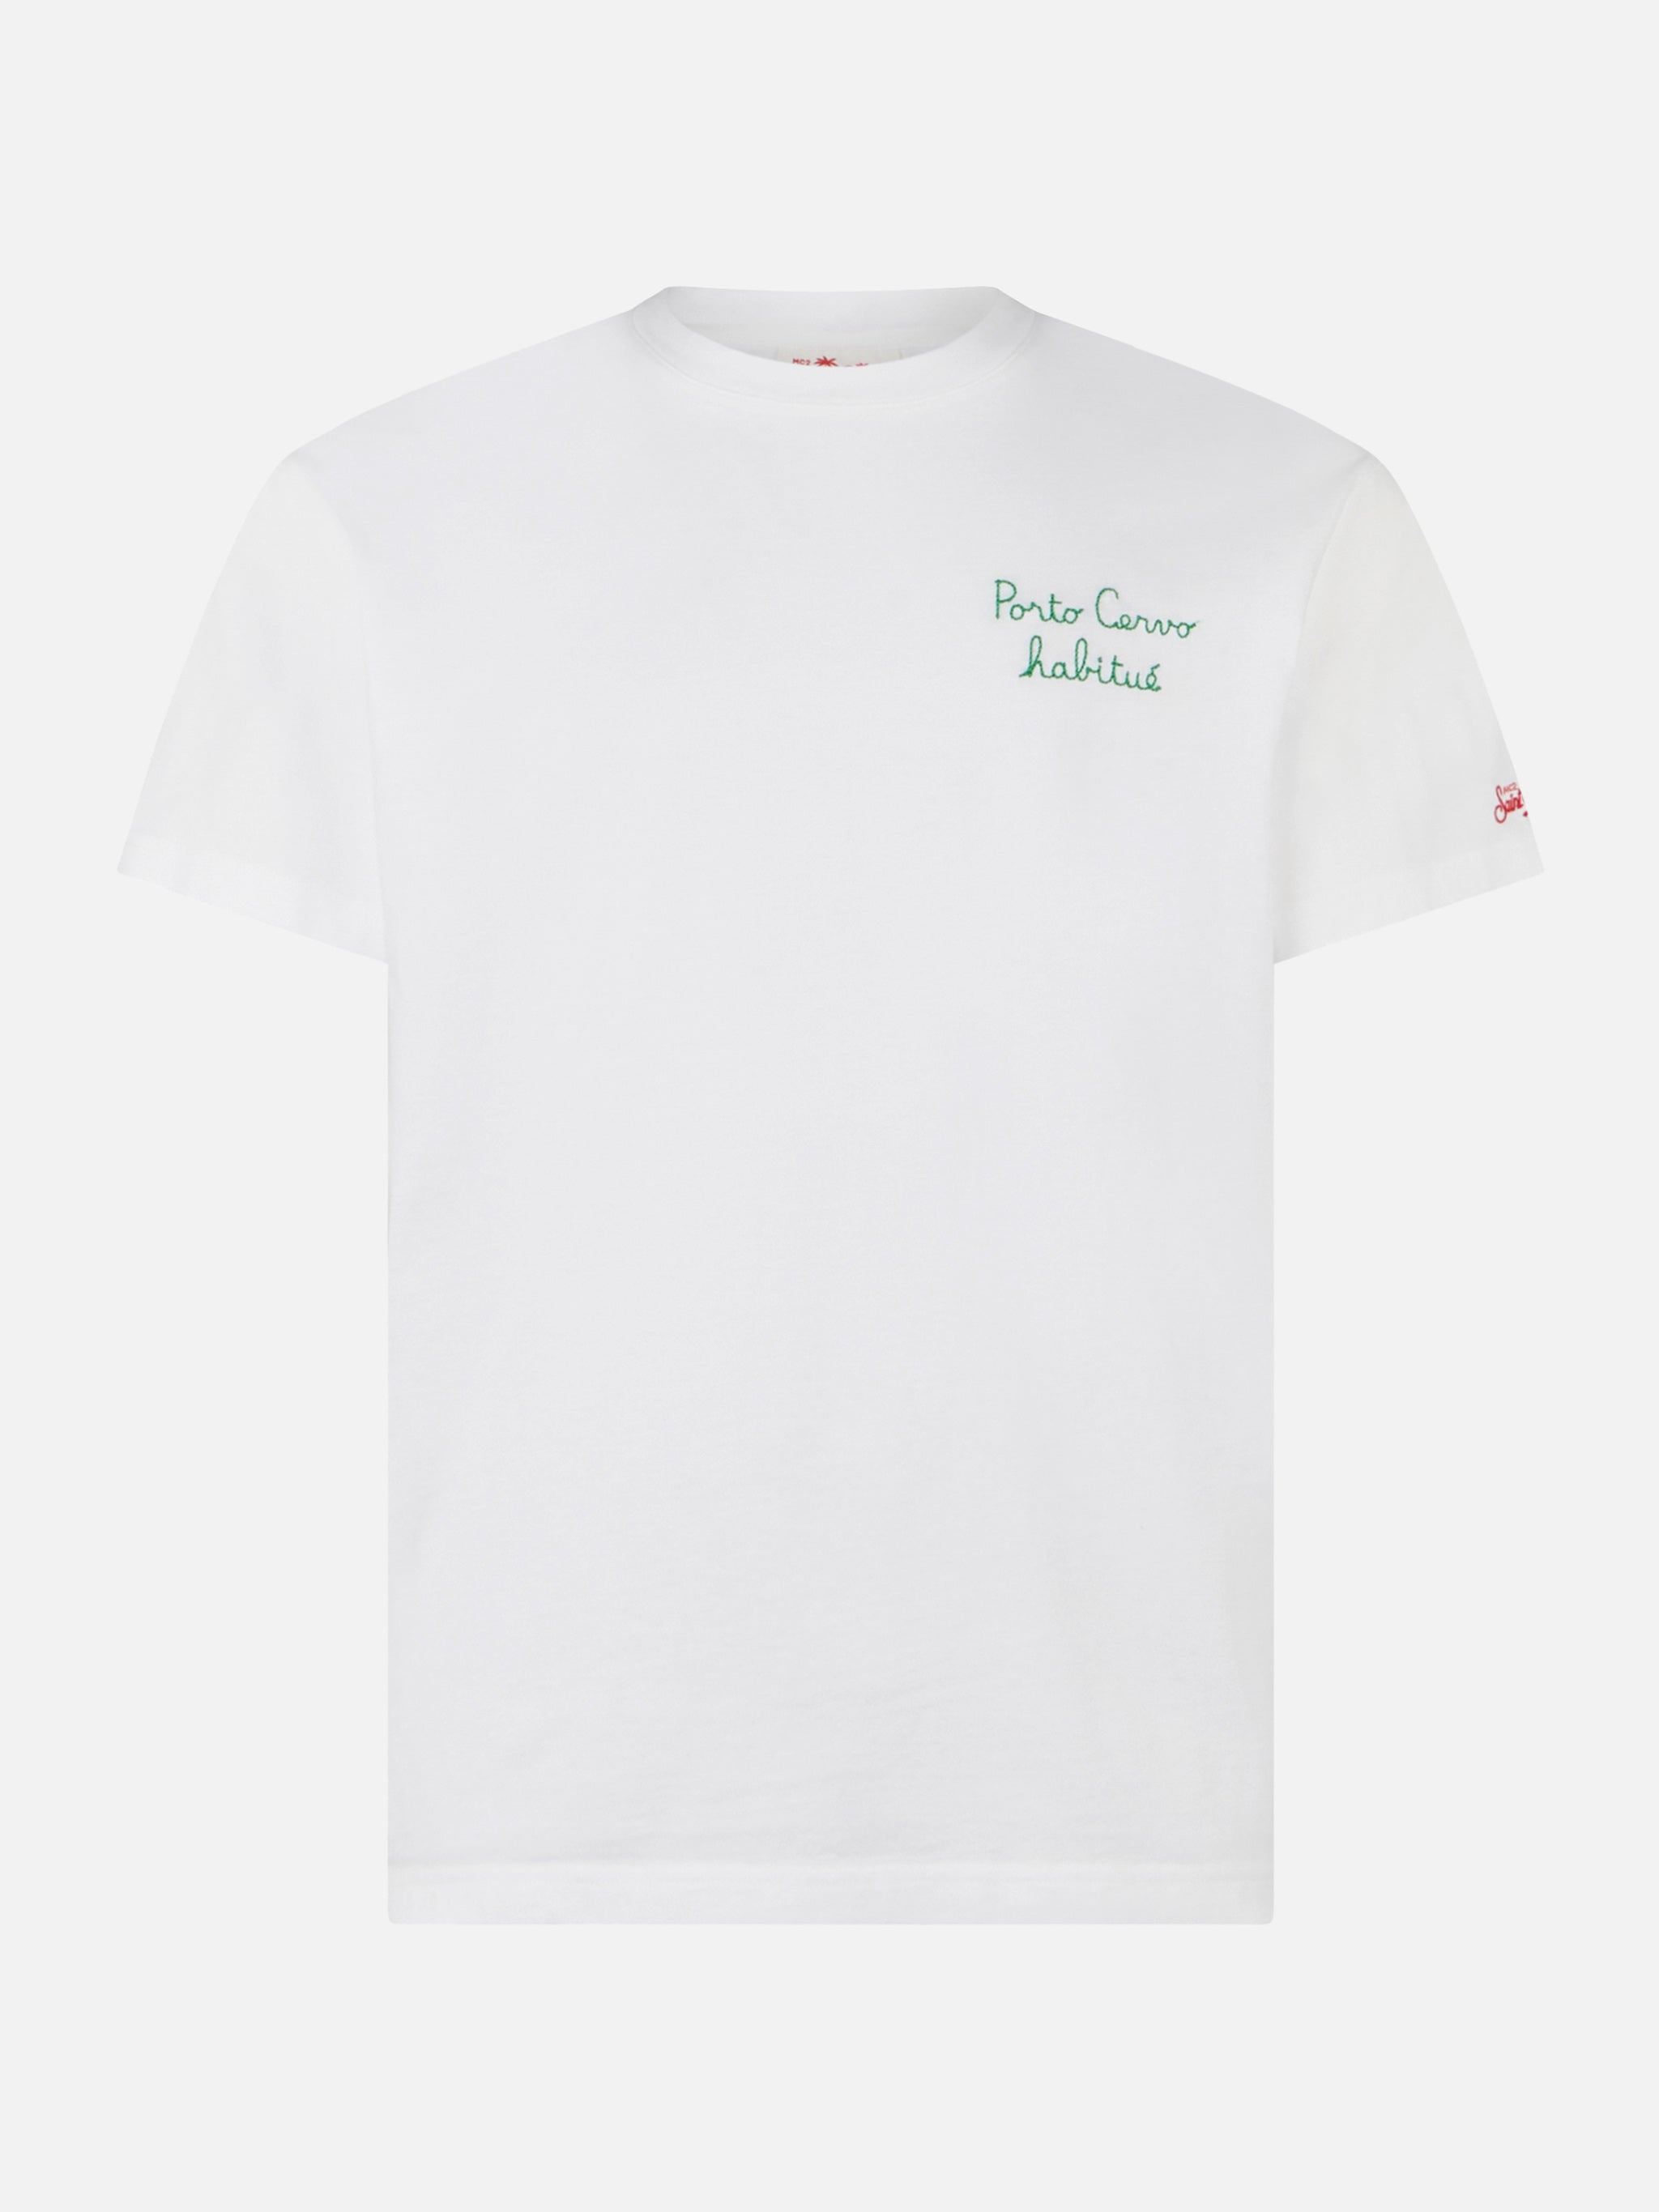 Man cotton t-shirt with Porto Cervo habituè embroidery – MC2 Saint Barth